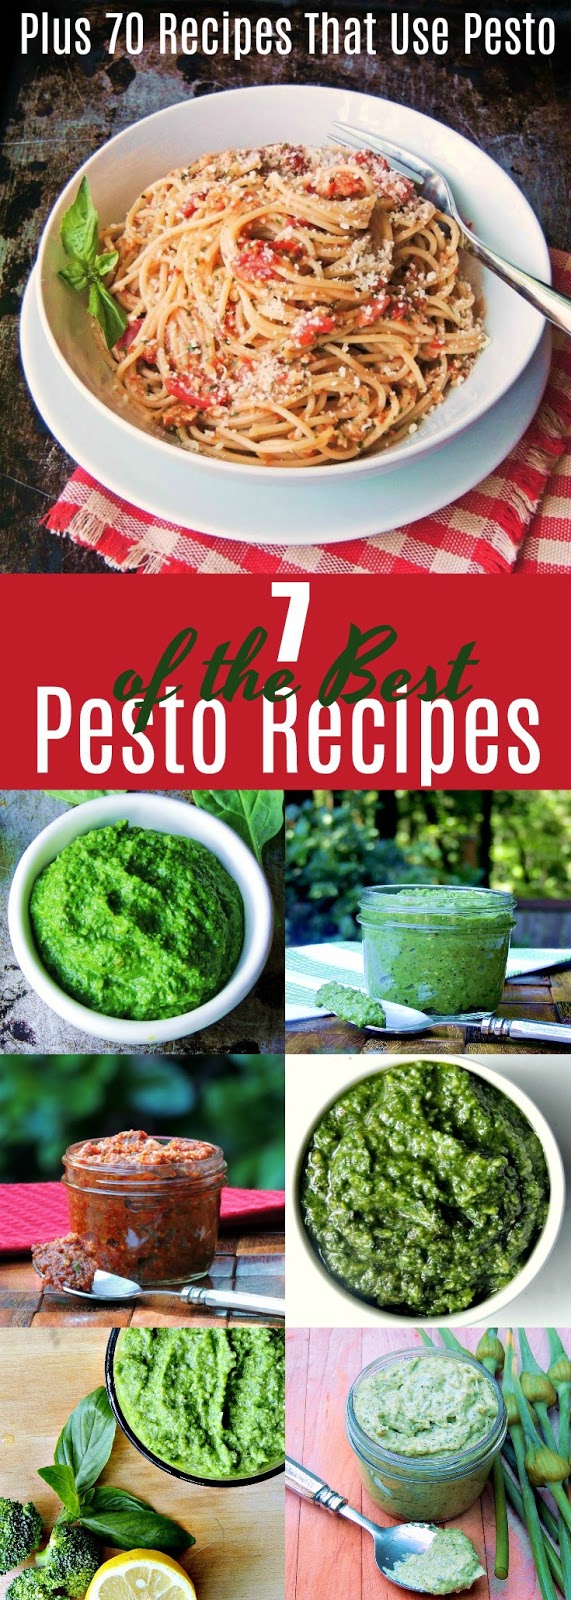 7 of the Best Pesto Recipes